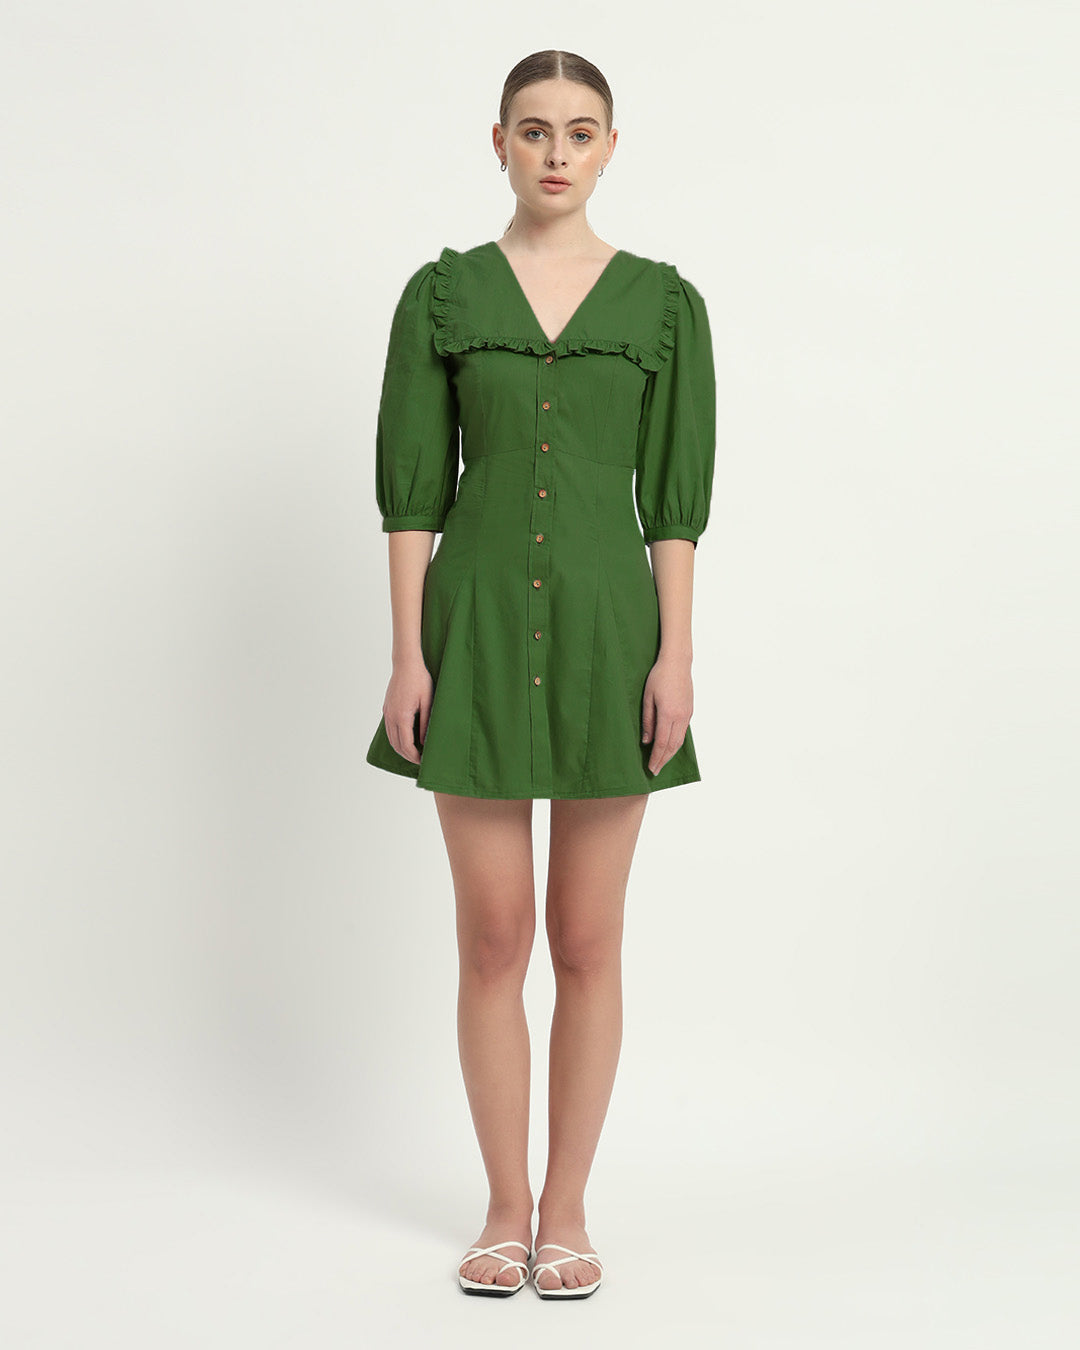 The Emerald Isabela Cotton Dress